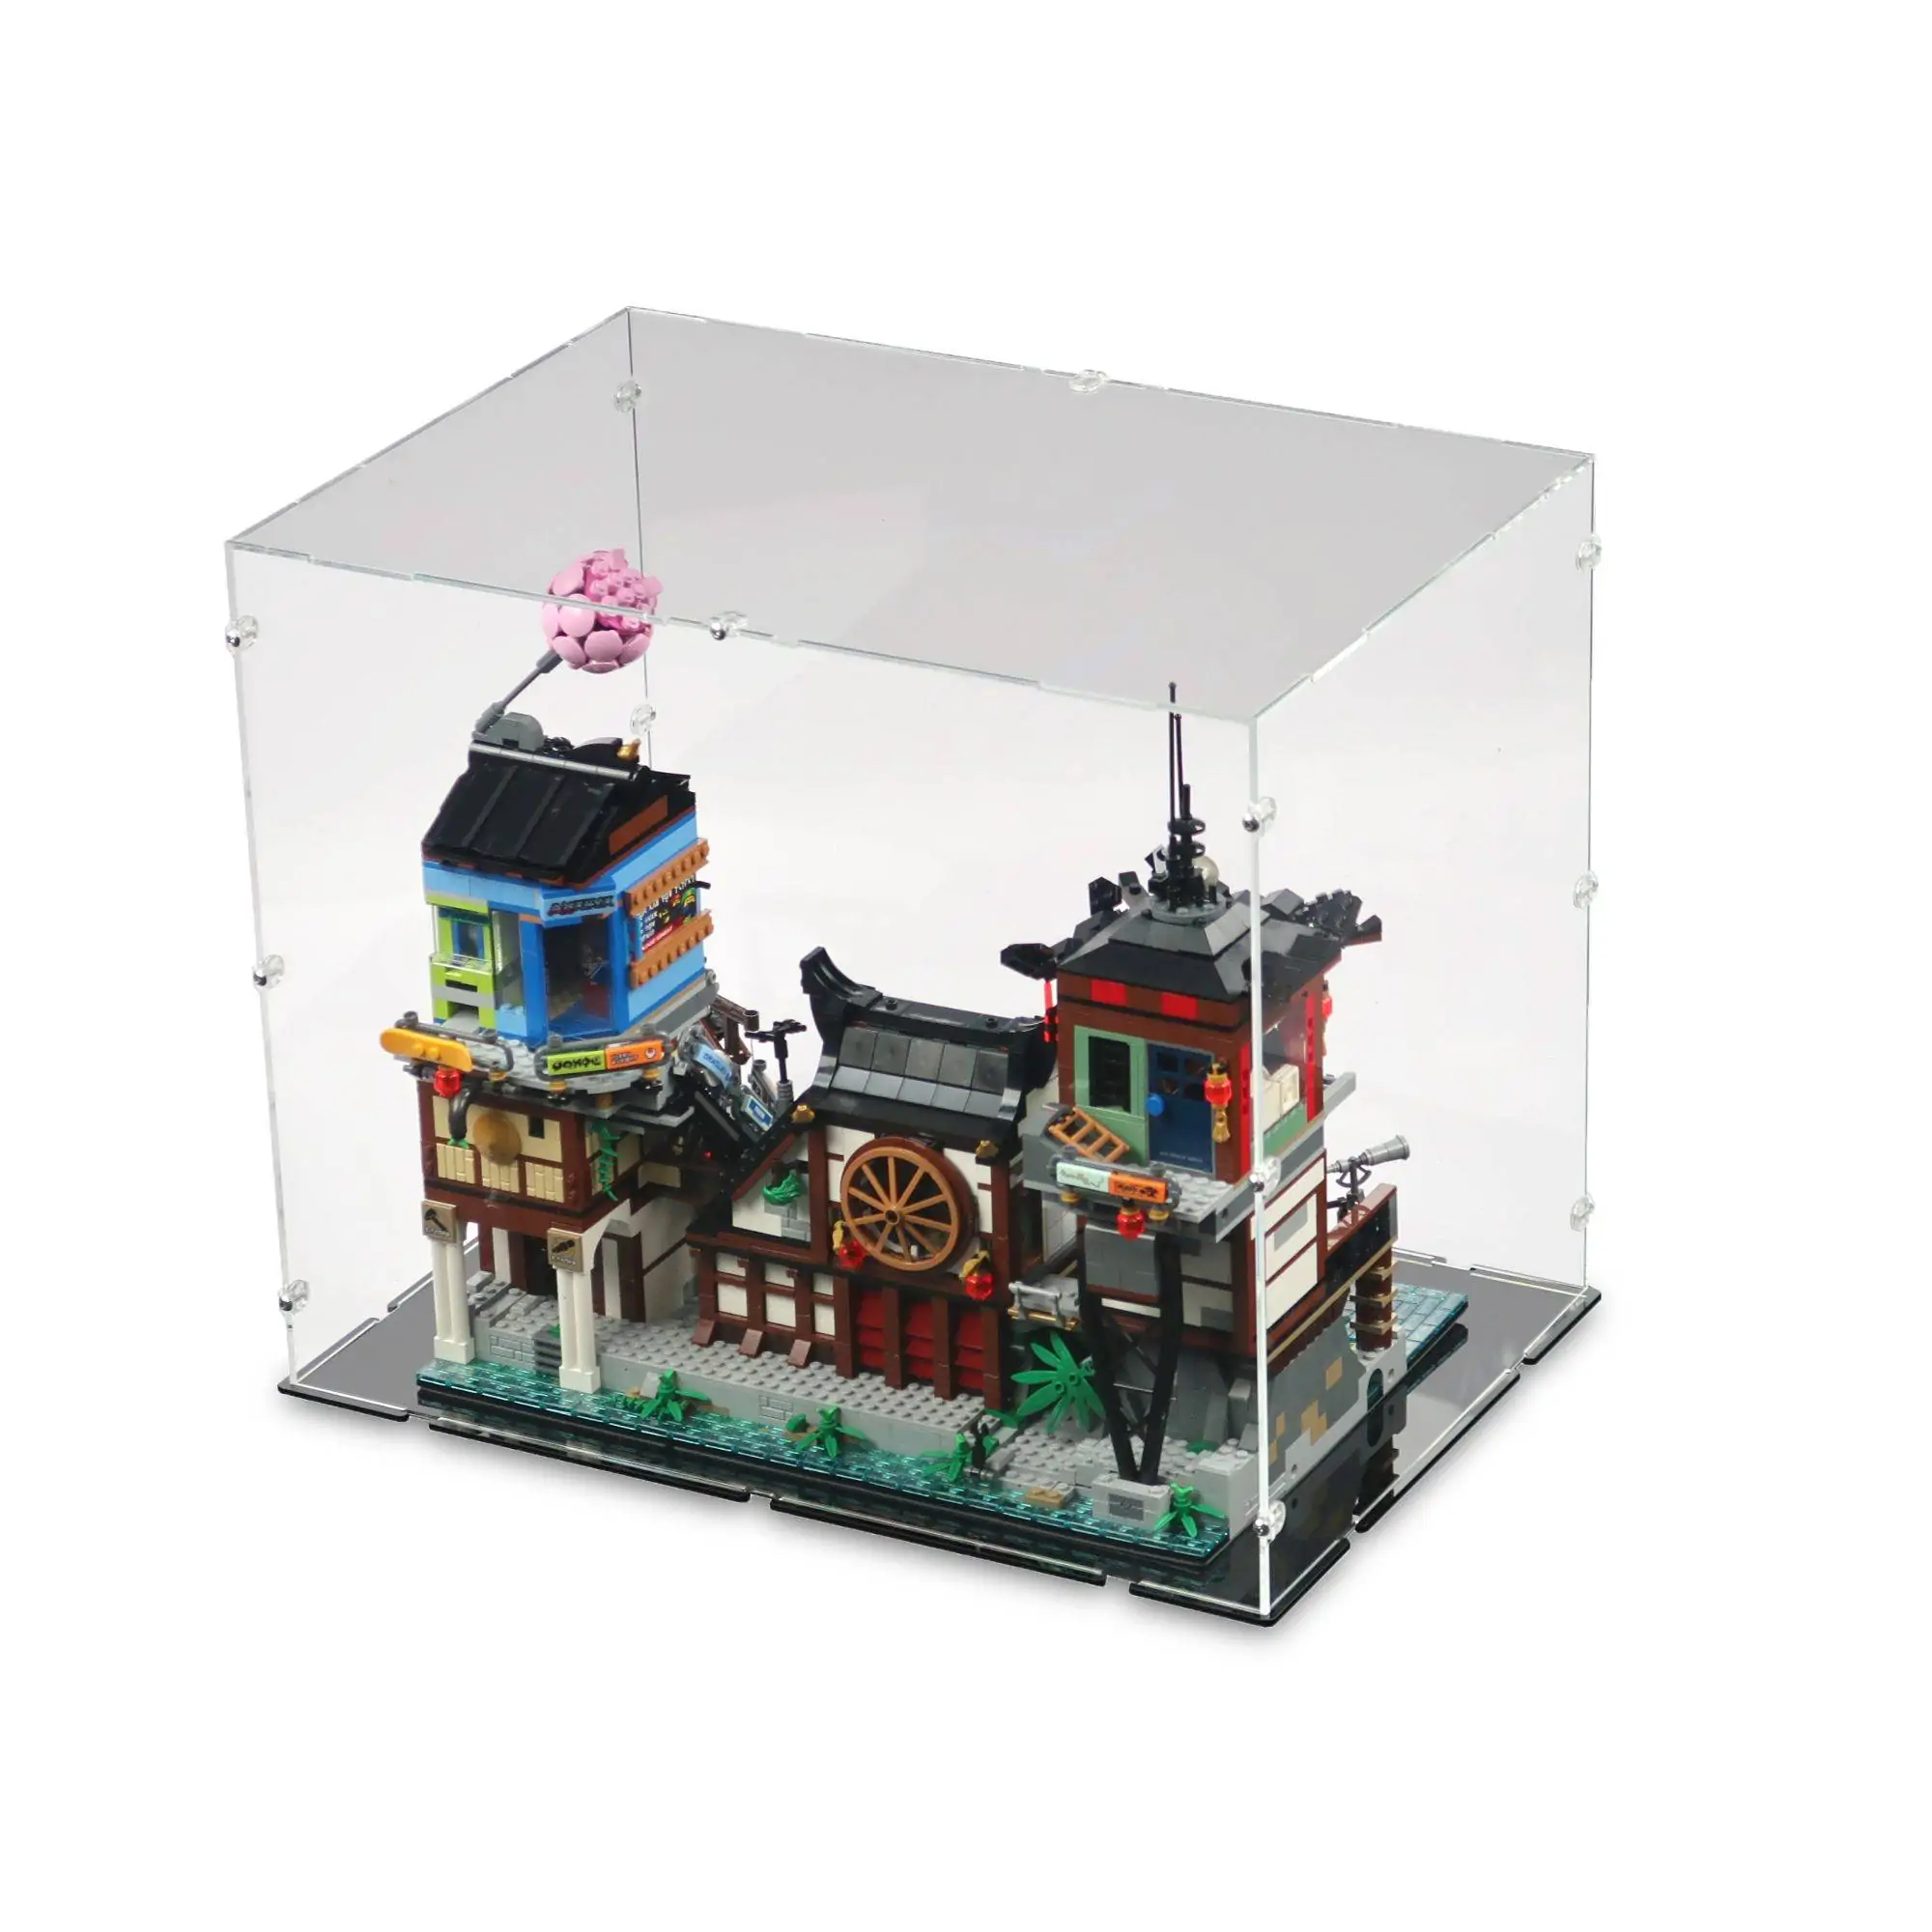 Acrylic Display for LEGO Ninjago City Docks iDisplayit